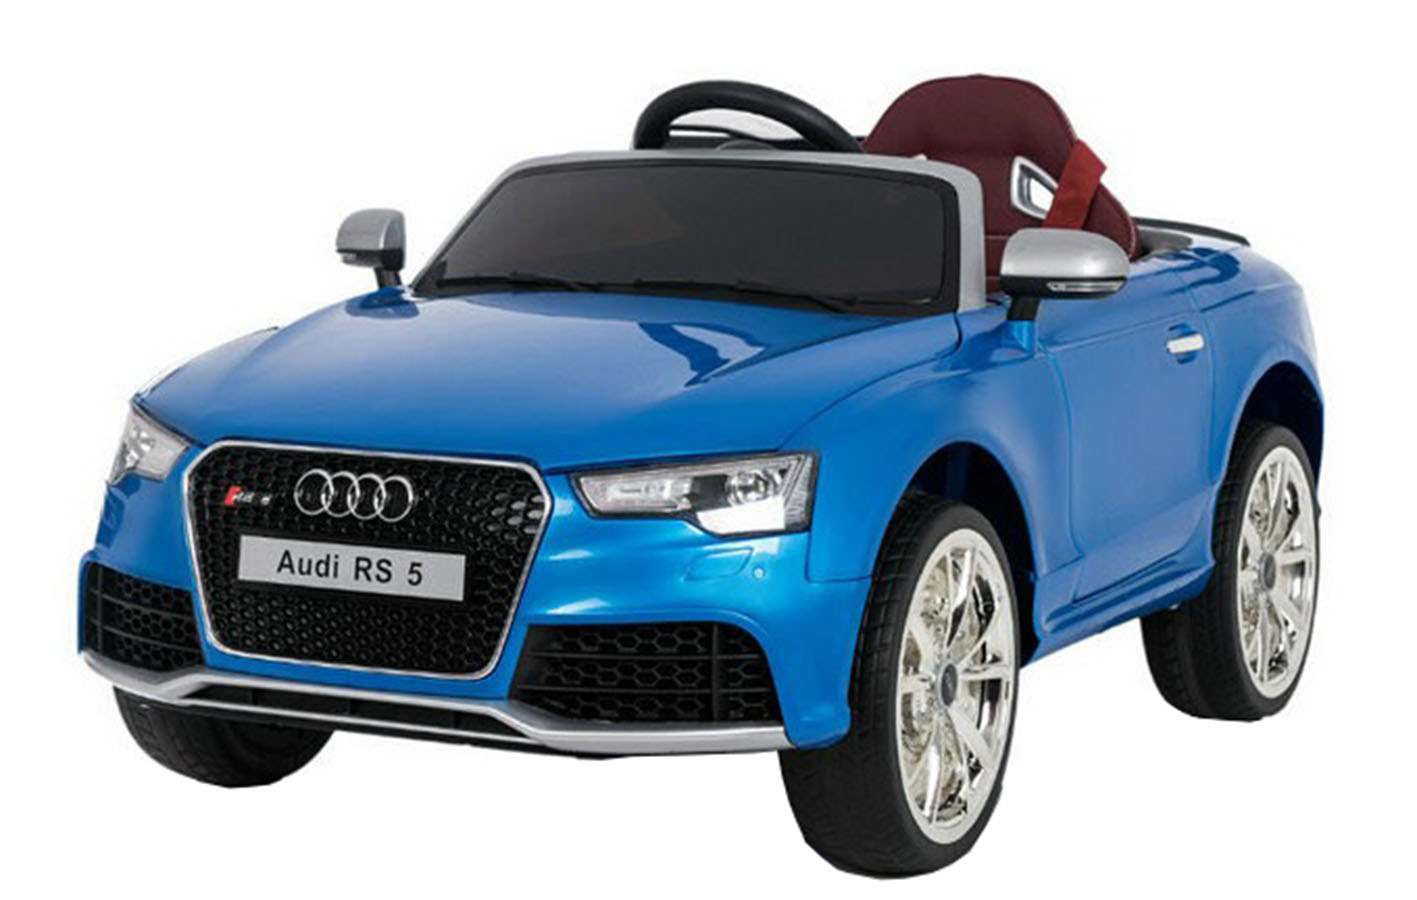 Masinuta electrica Premier Audi RS5, 12V, roti cauciuc EVA, scaun piele ecologica, albastra